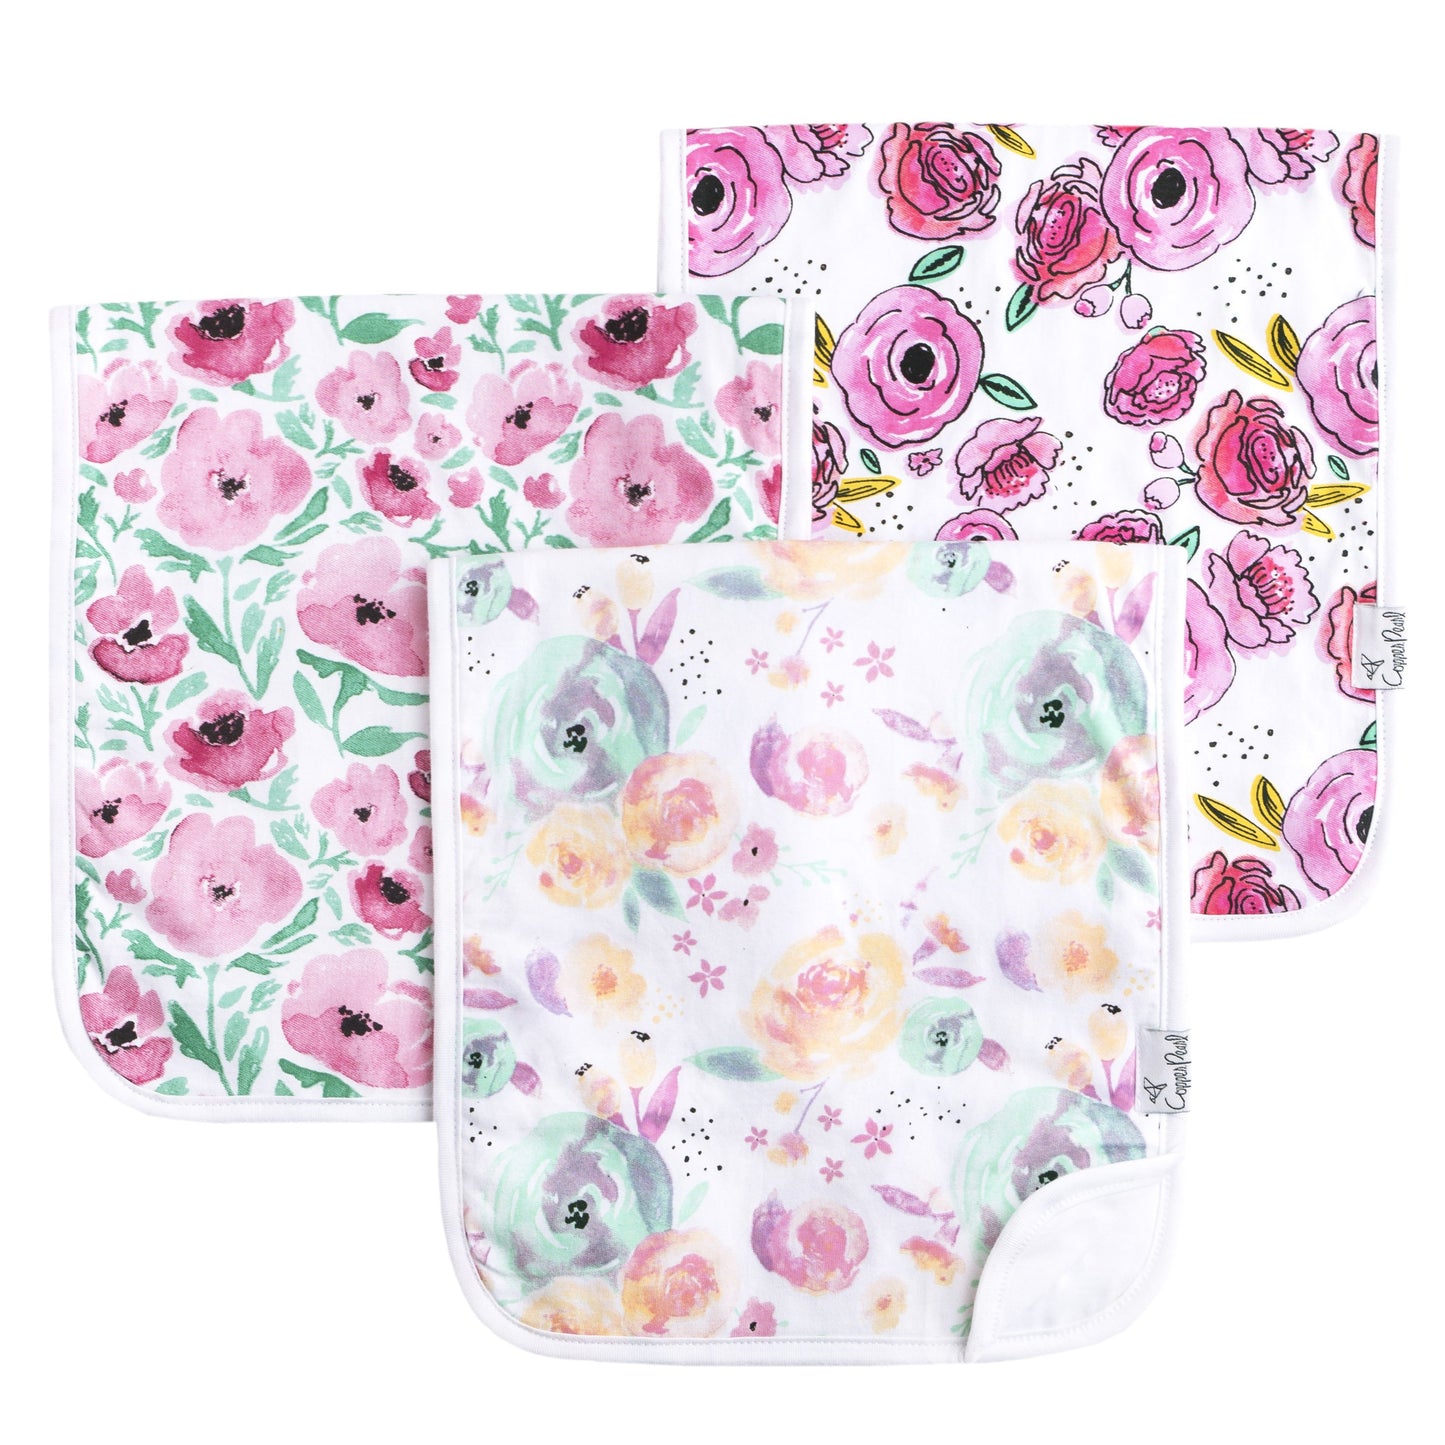 Bloom Burp Cloth Set - 3 Pack